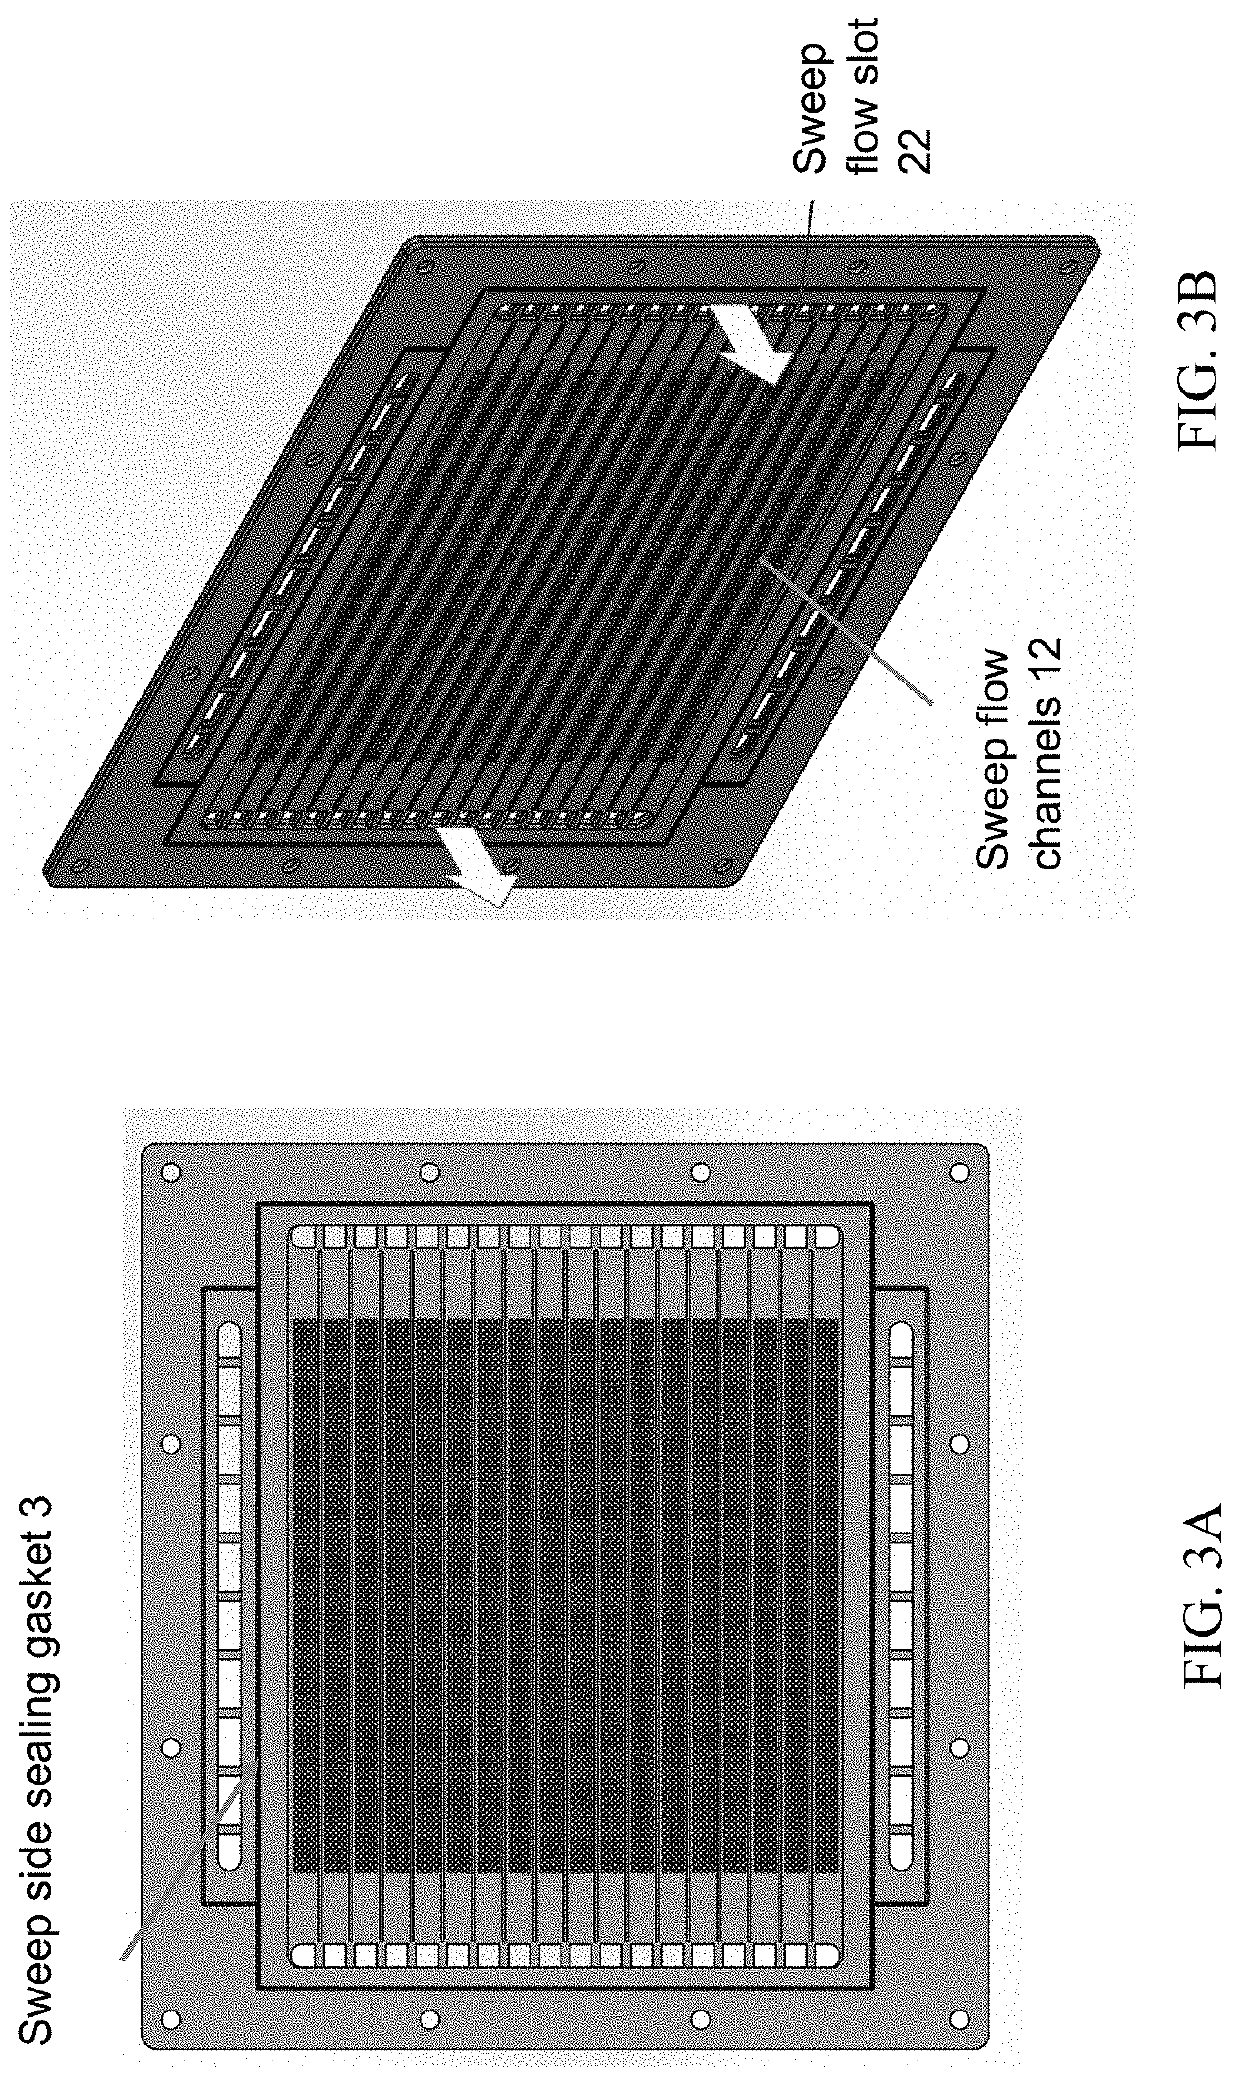 Universal Planar Membrane Device for Mass Transfer